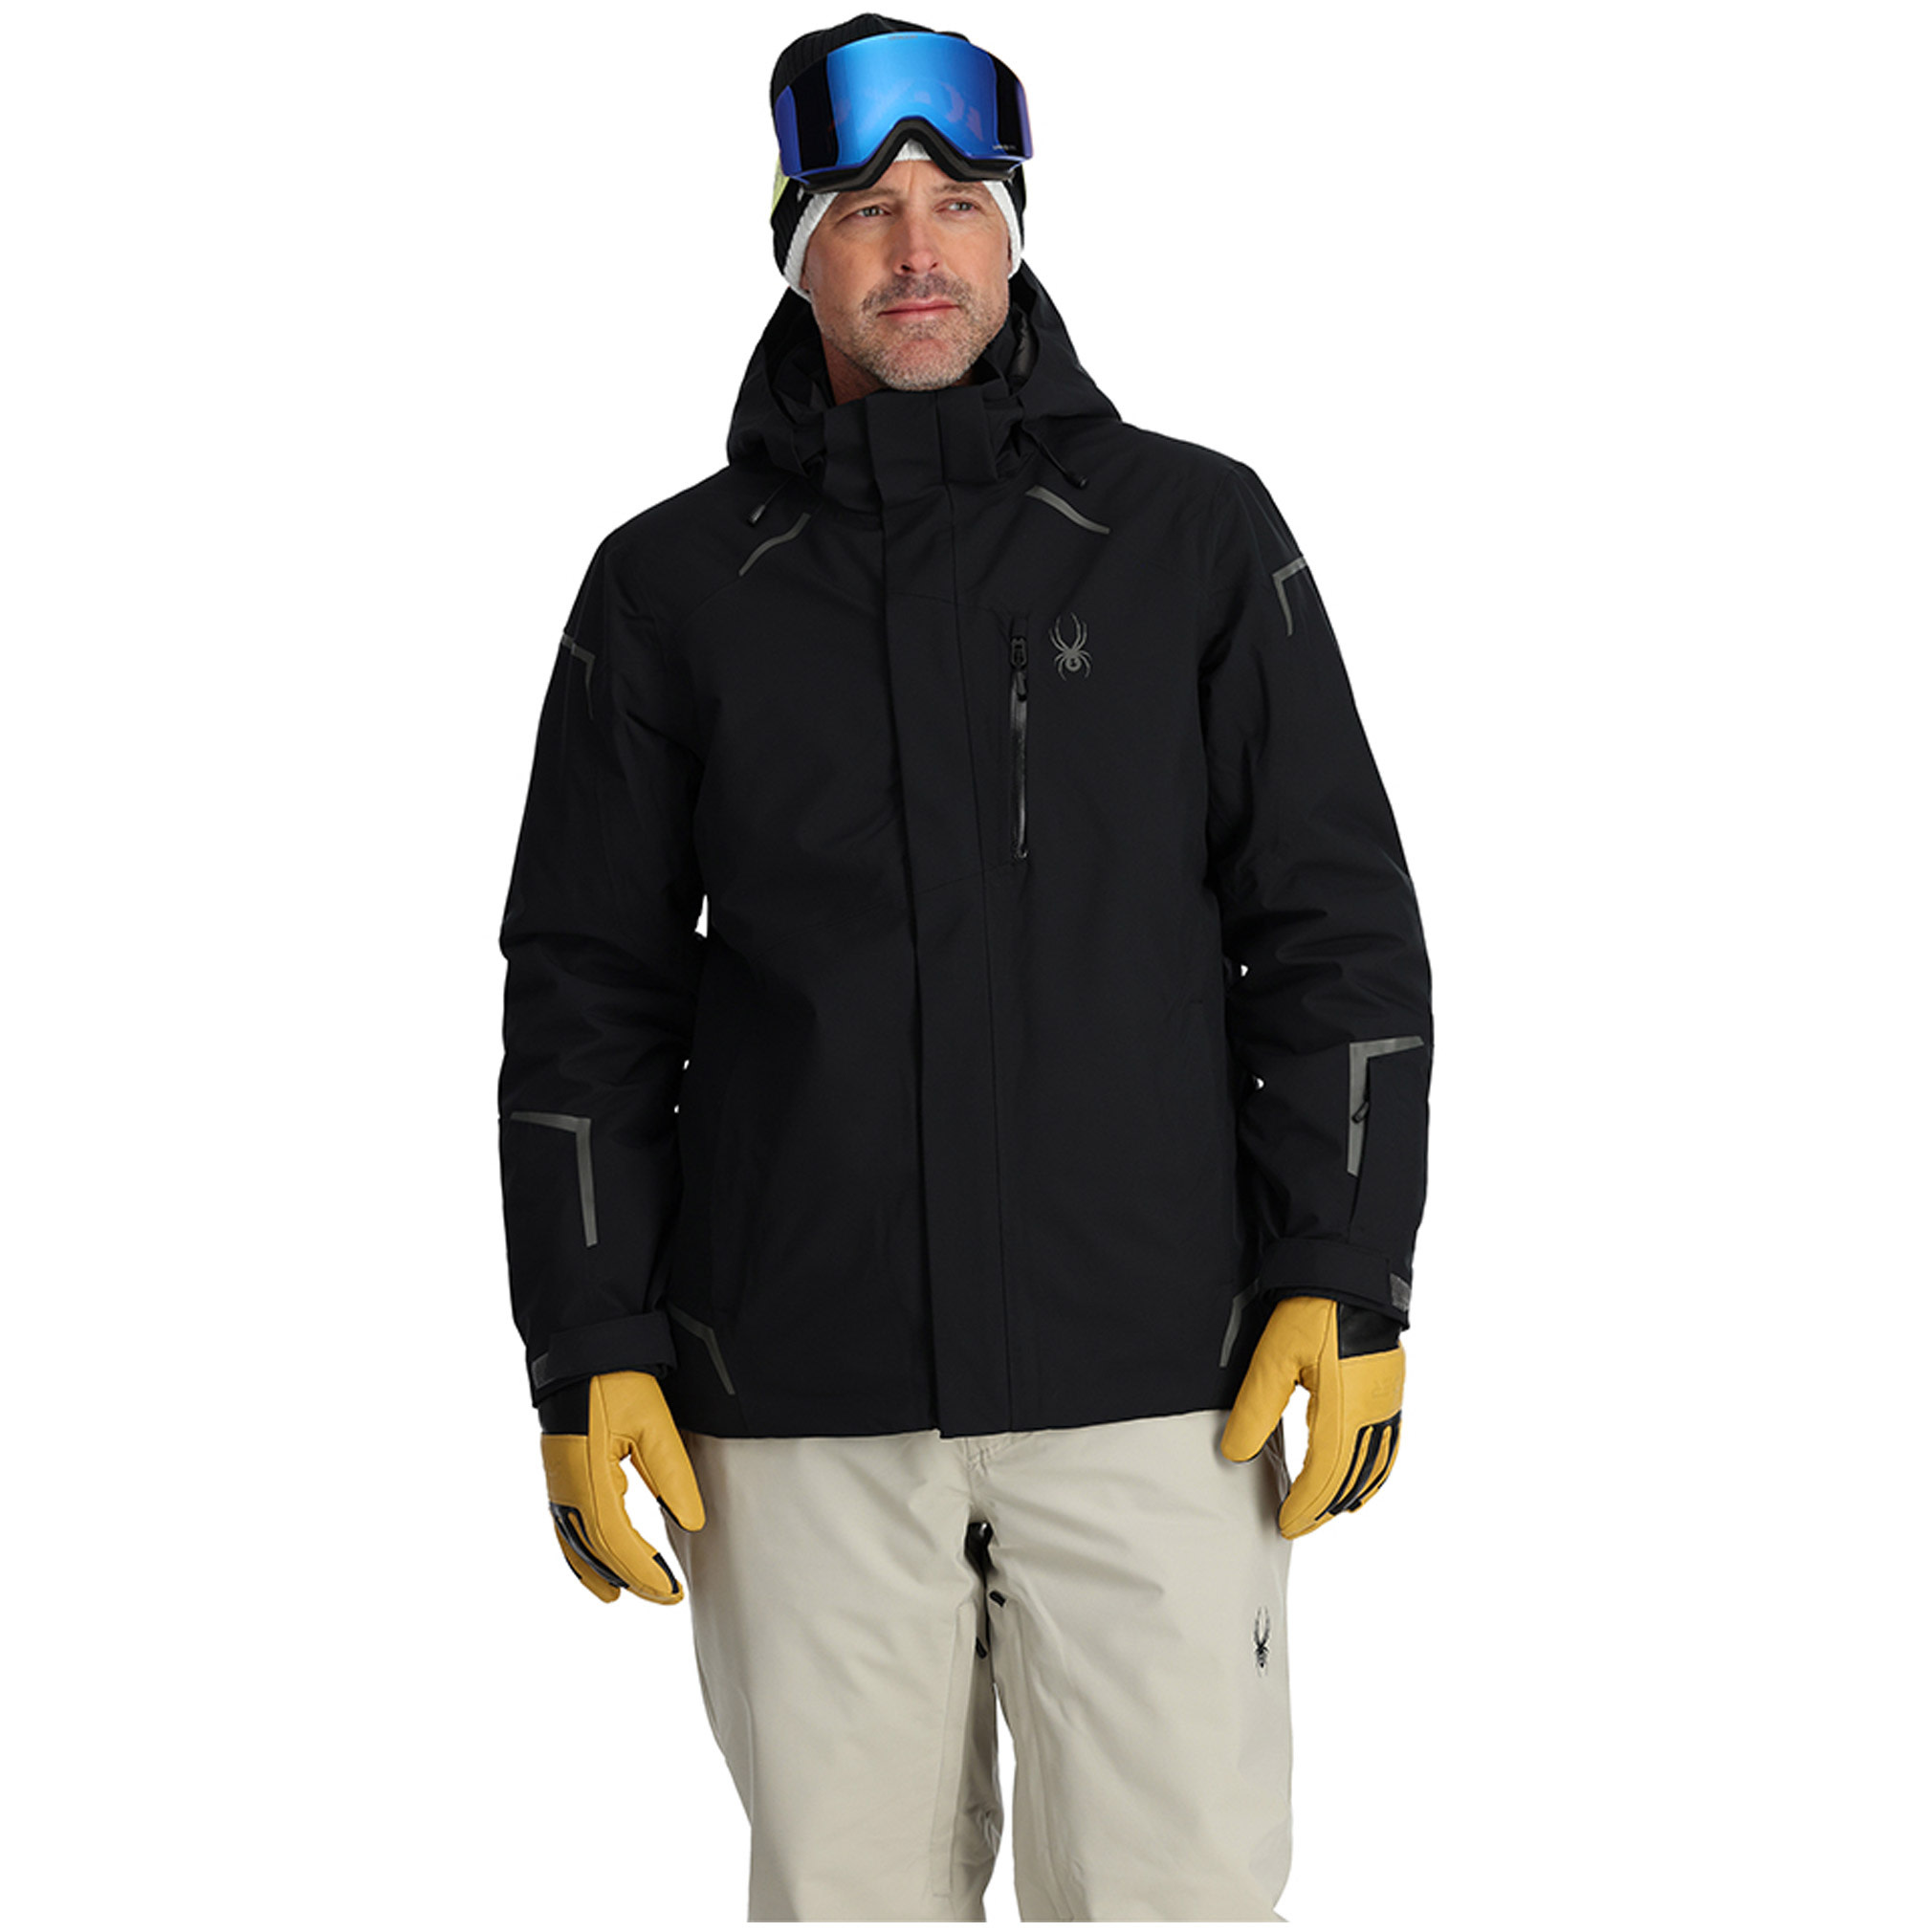 Veste ski Spyder Leader Homme - Vêtements ski